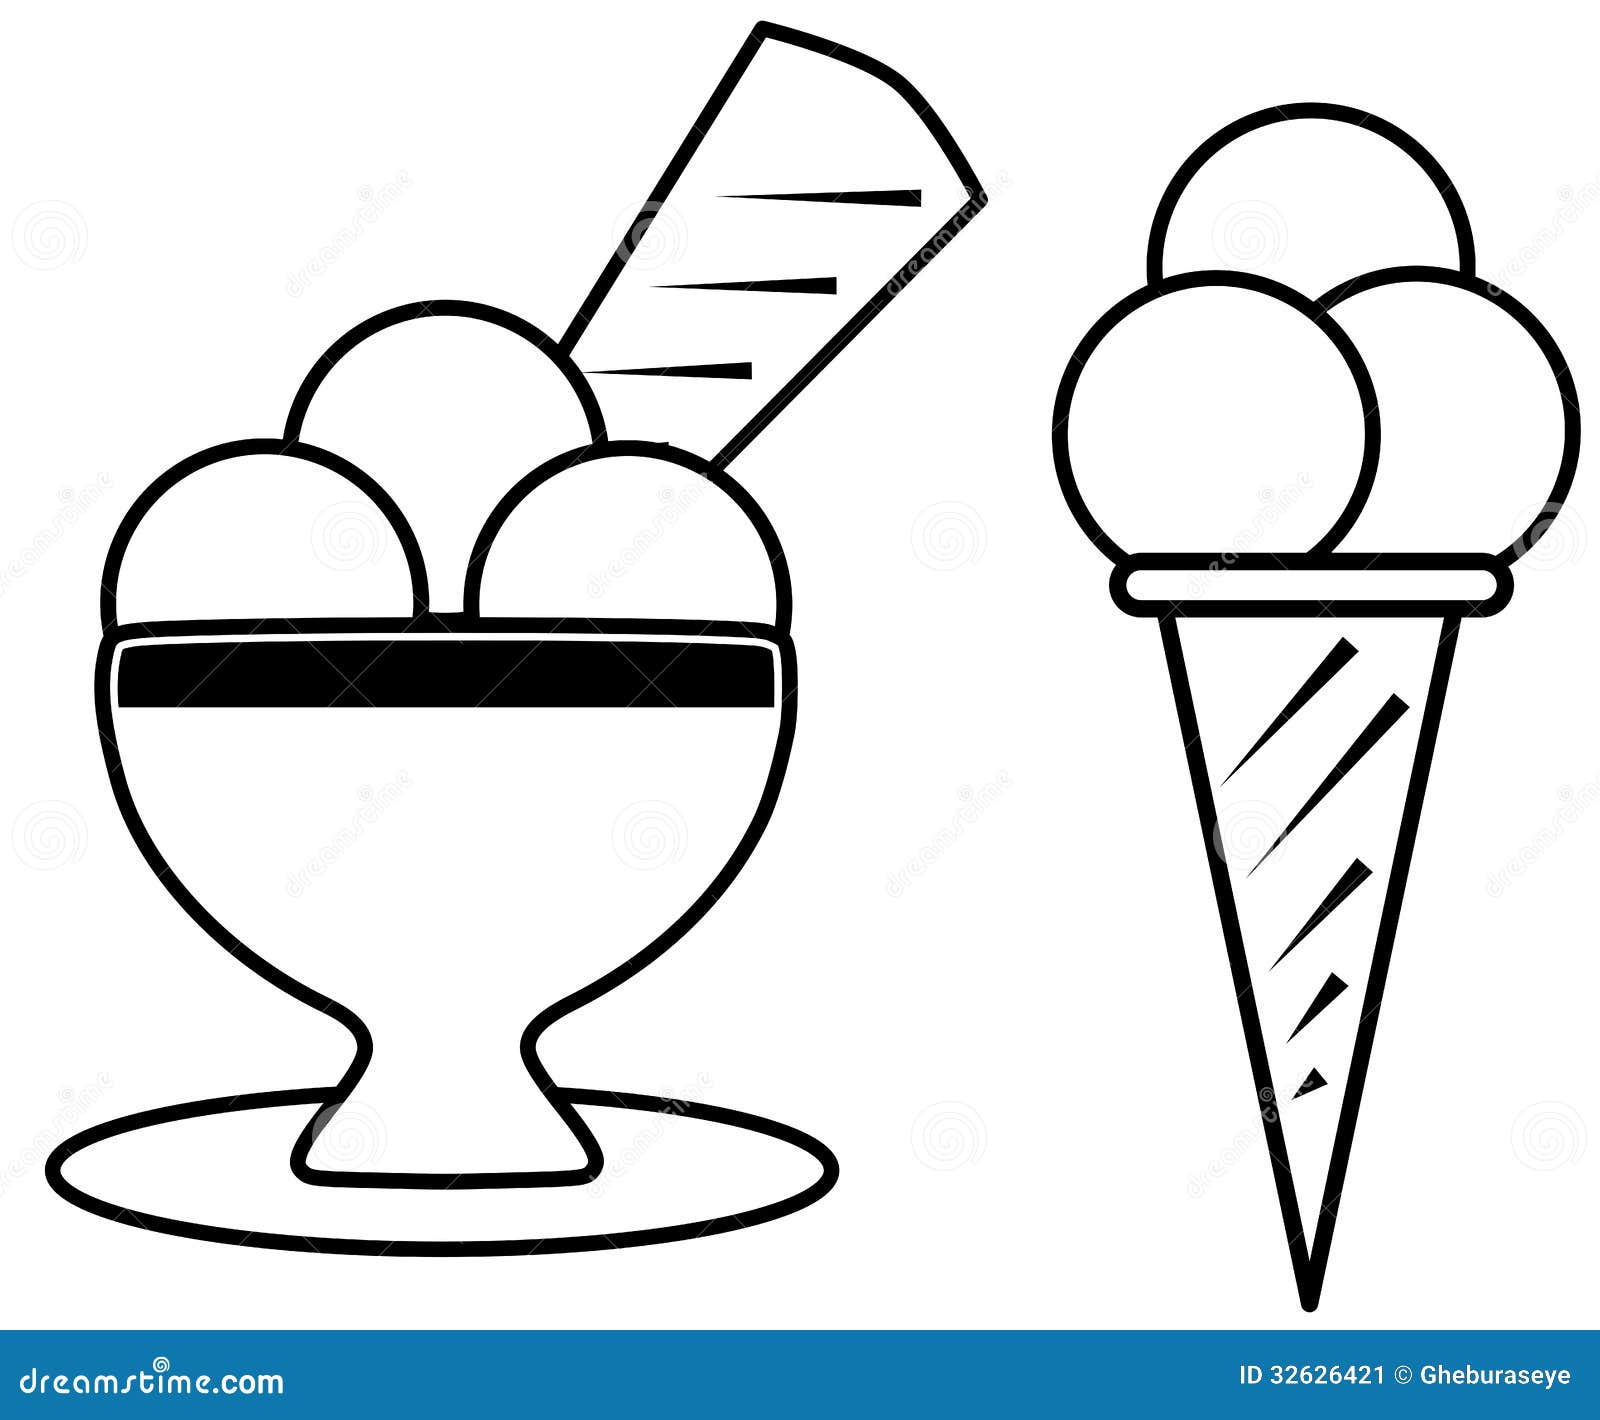 Coloring Ice Cream Stock Image - Image: 32626421